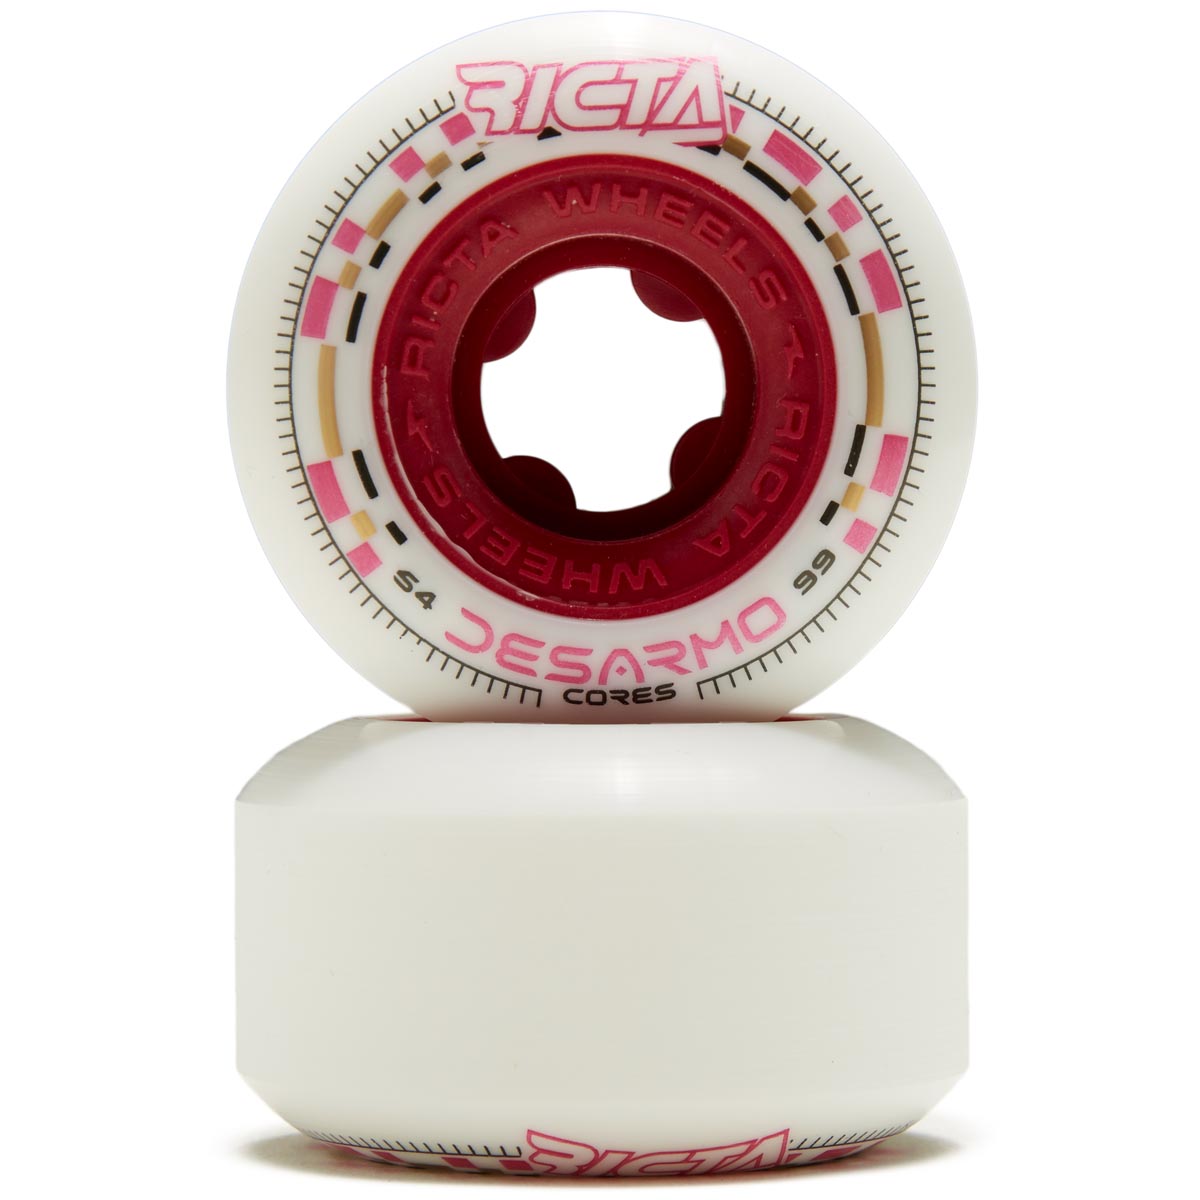 Ricta Desarmo Cores Round 99a Skateboard Wheels - White - 54mm image 2